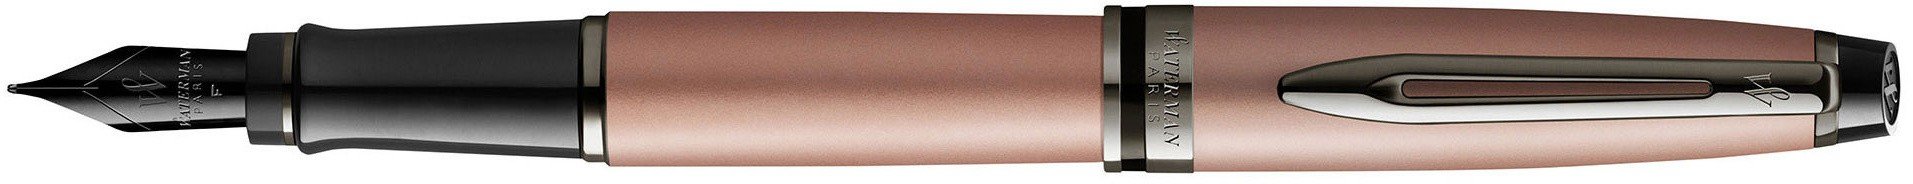 Ручка перьевая Waterman Expert DeLuxe Metallic Rose Gold RT F перо сталь